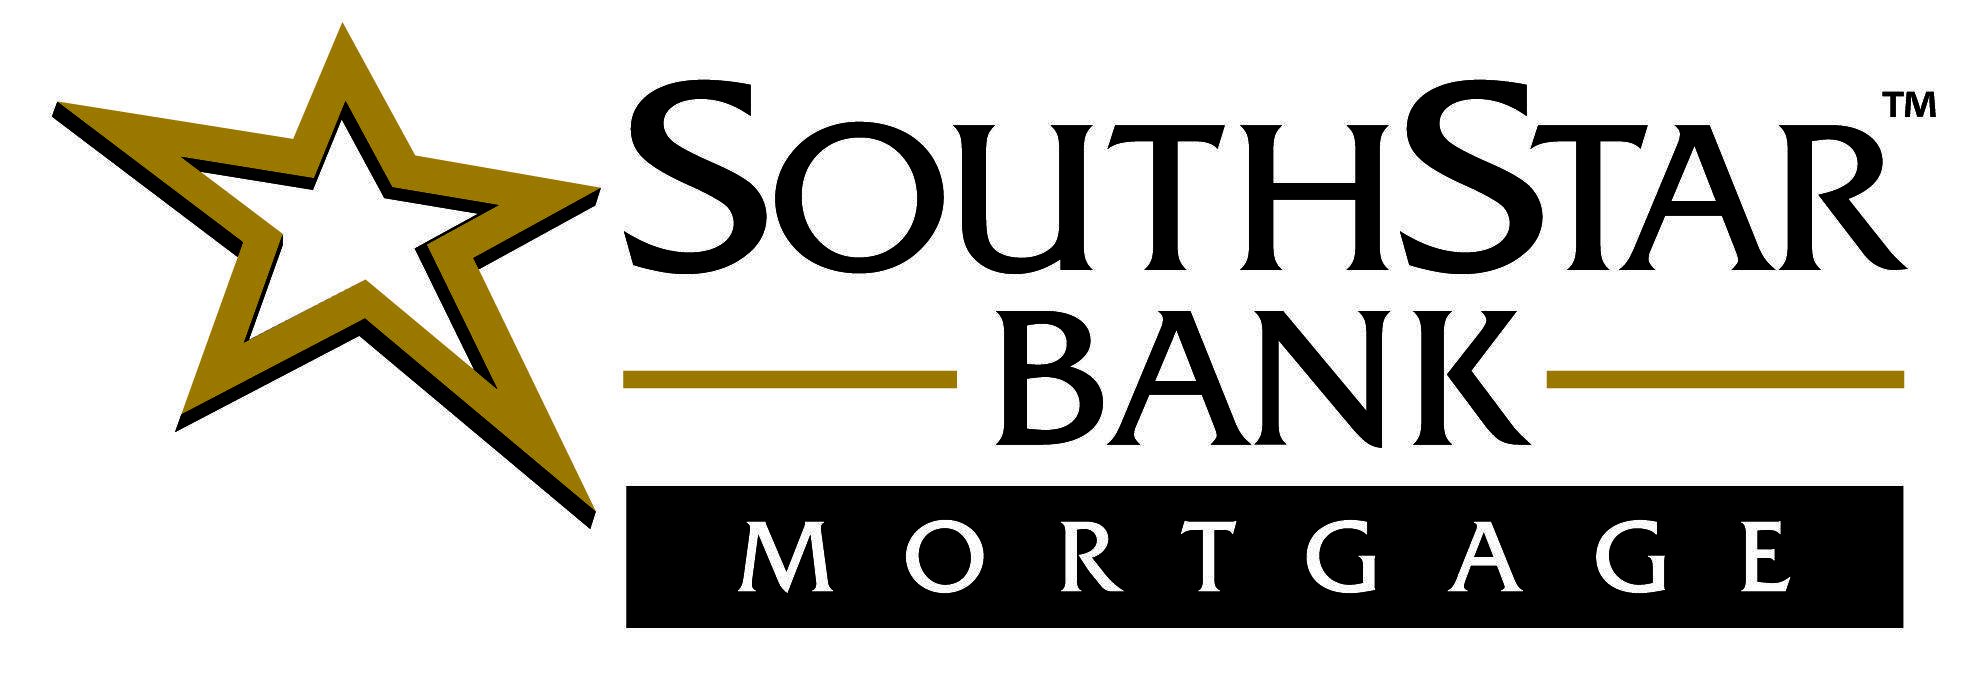 South Star Logo - SouthStar Bank, S.S.B.